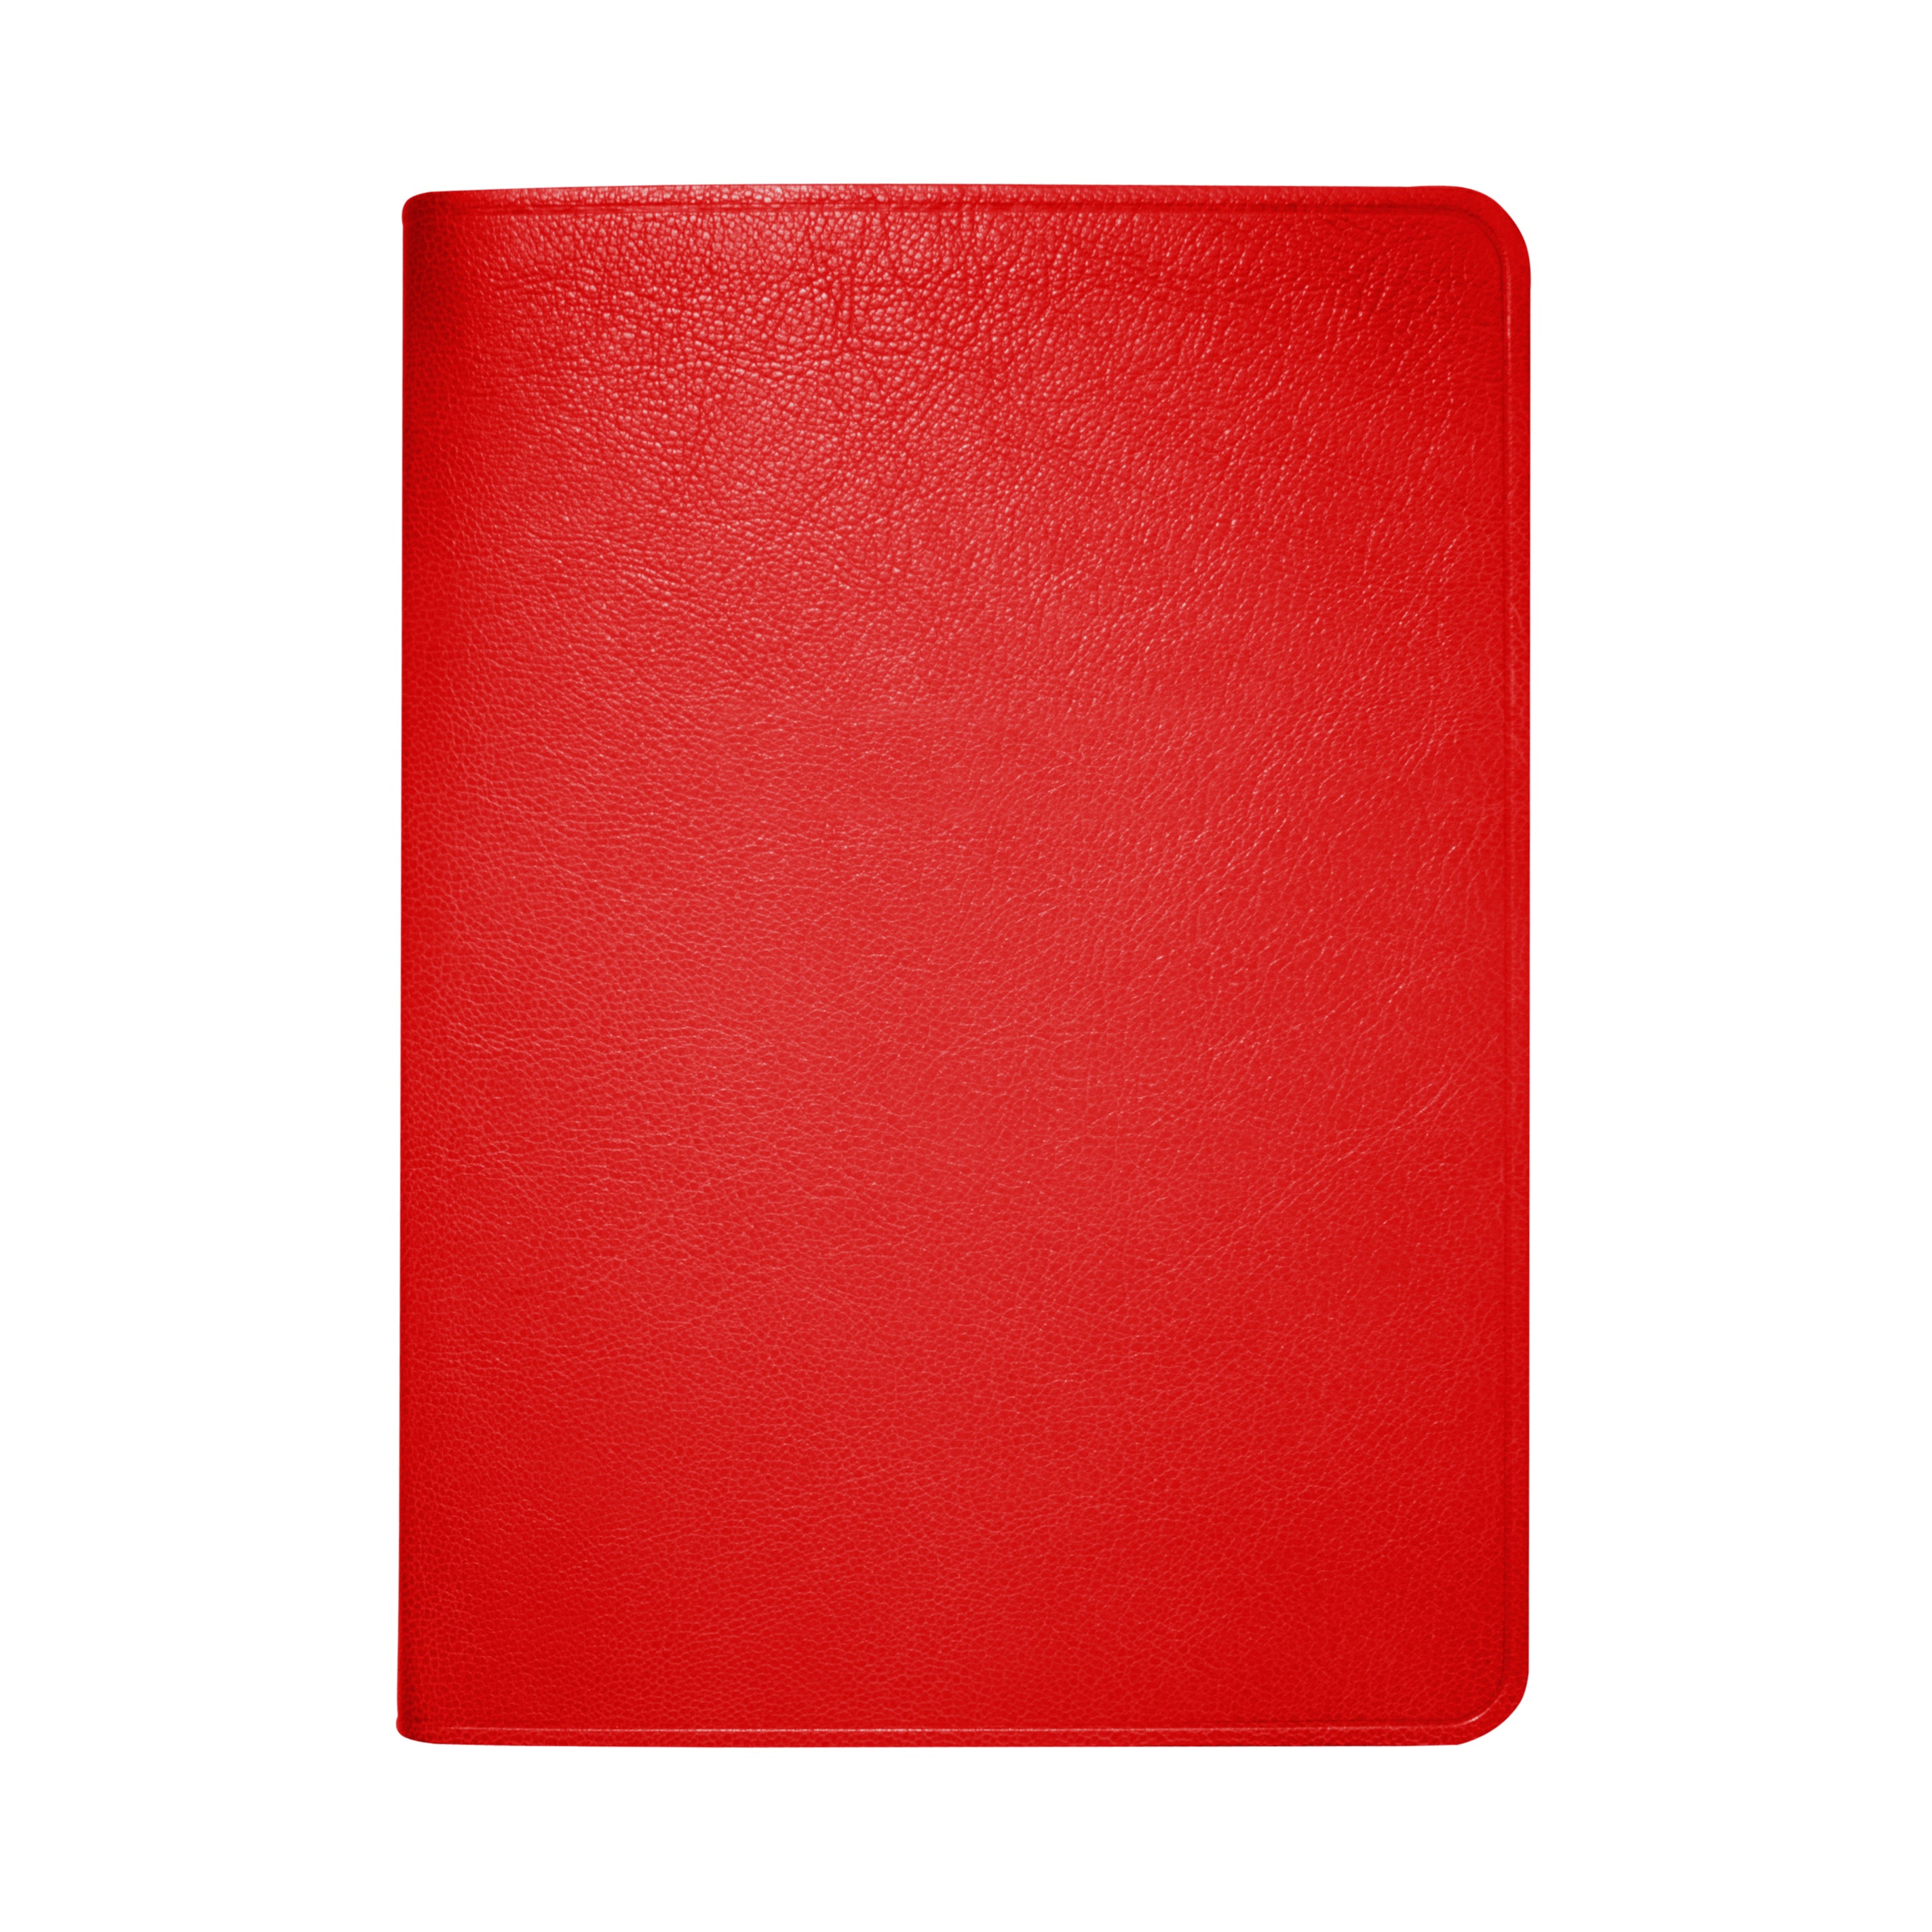 Graphic Image 7 X 5 Medium Travel Journal Red Goatskin Leather